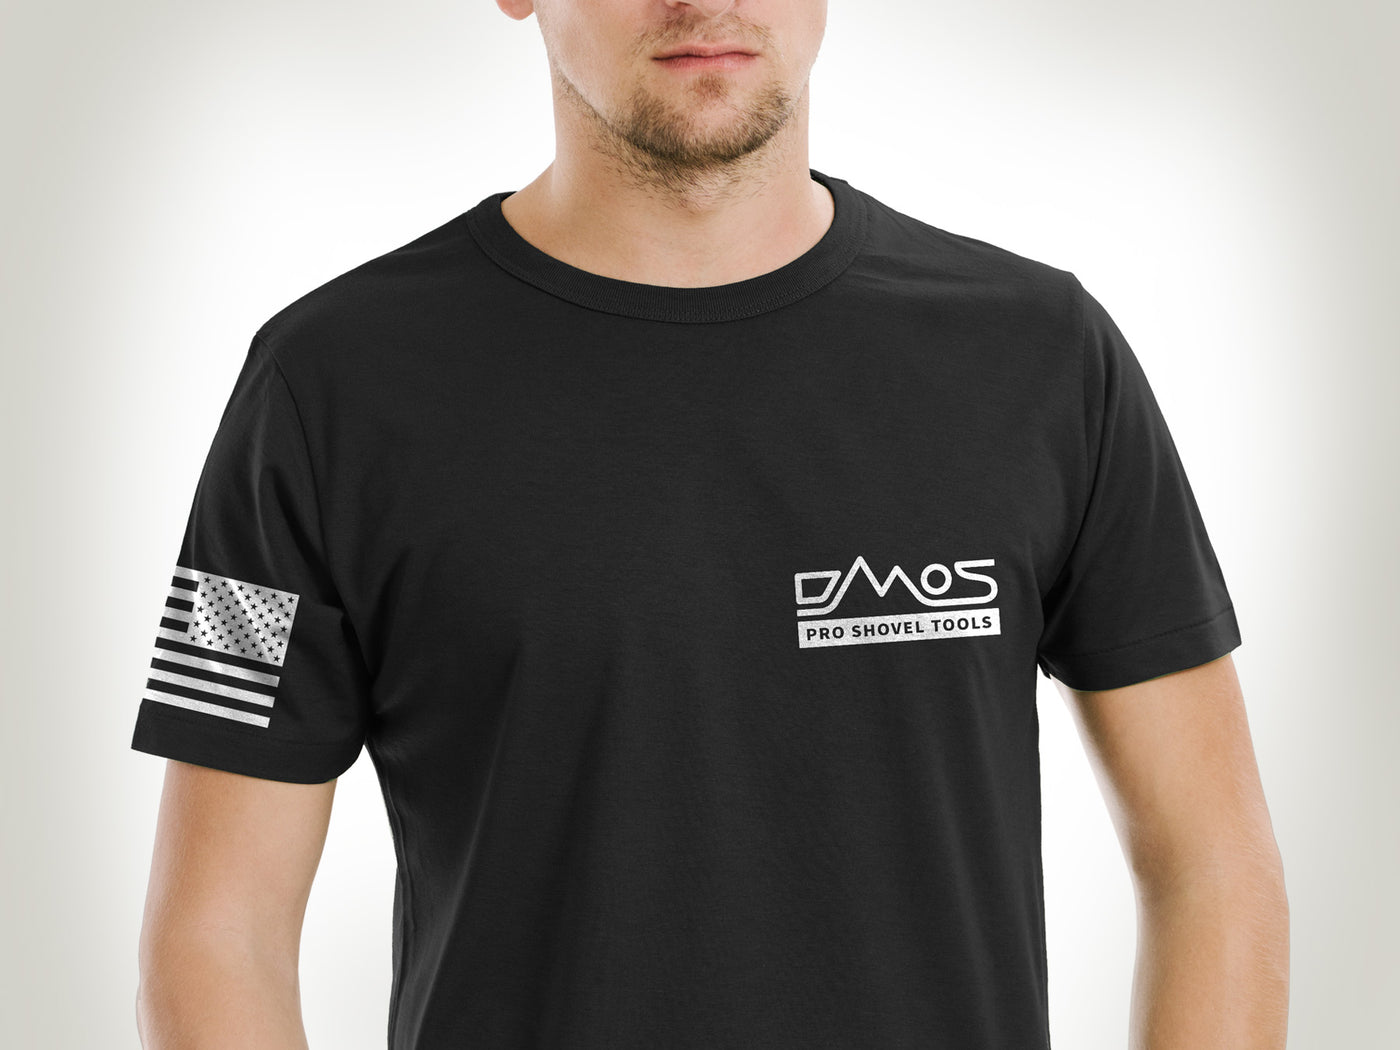 Unisex T-Shirt - DMOS Trapezoid Back with Flag on Sleeve